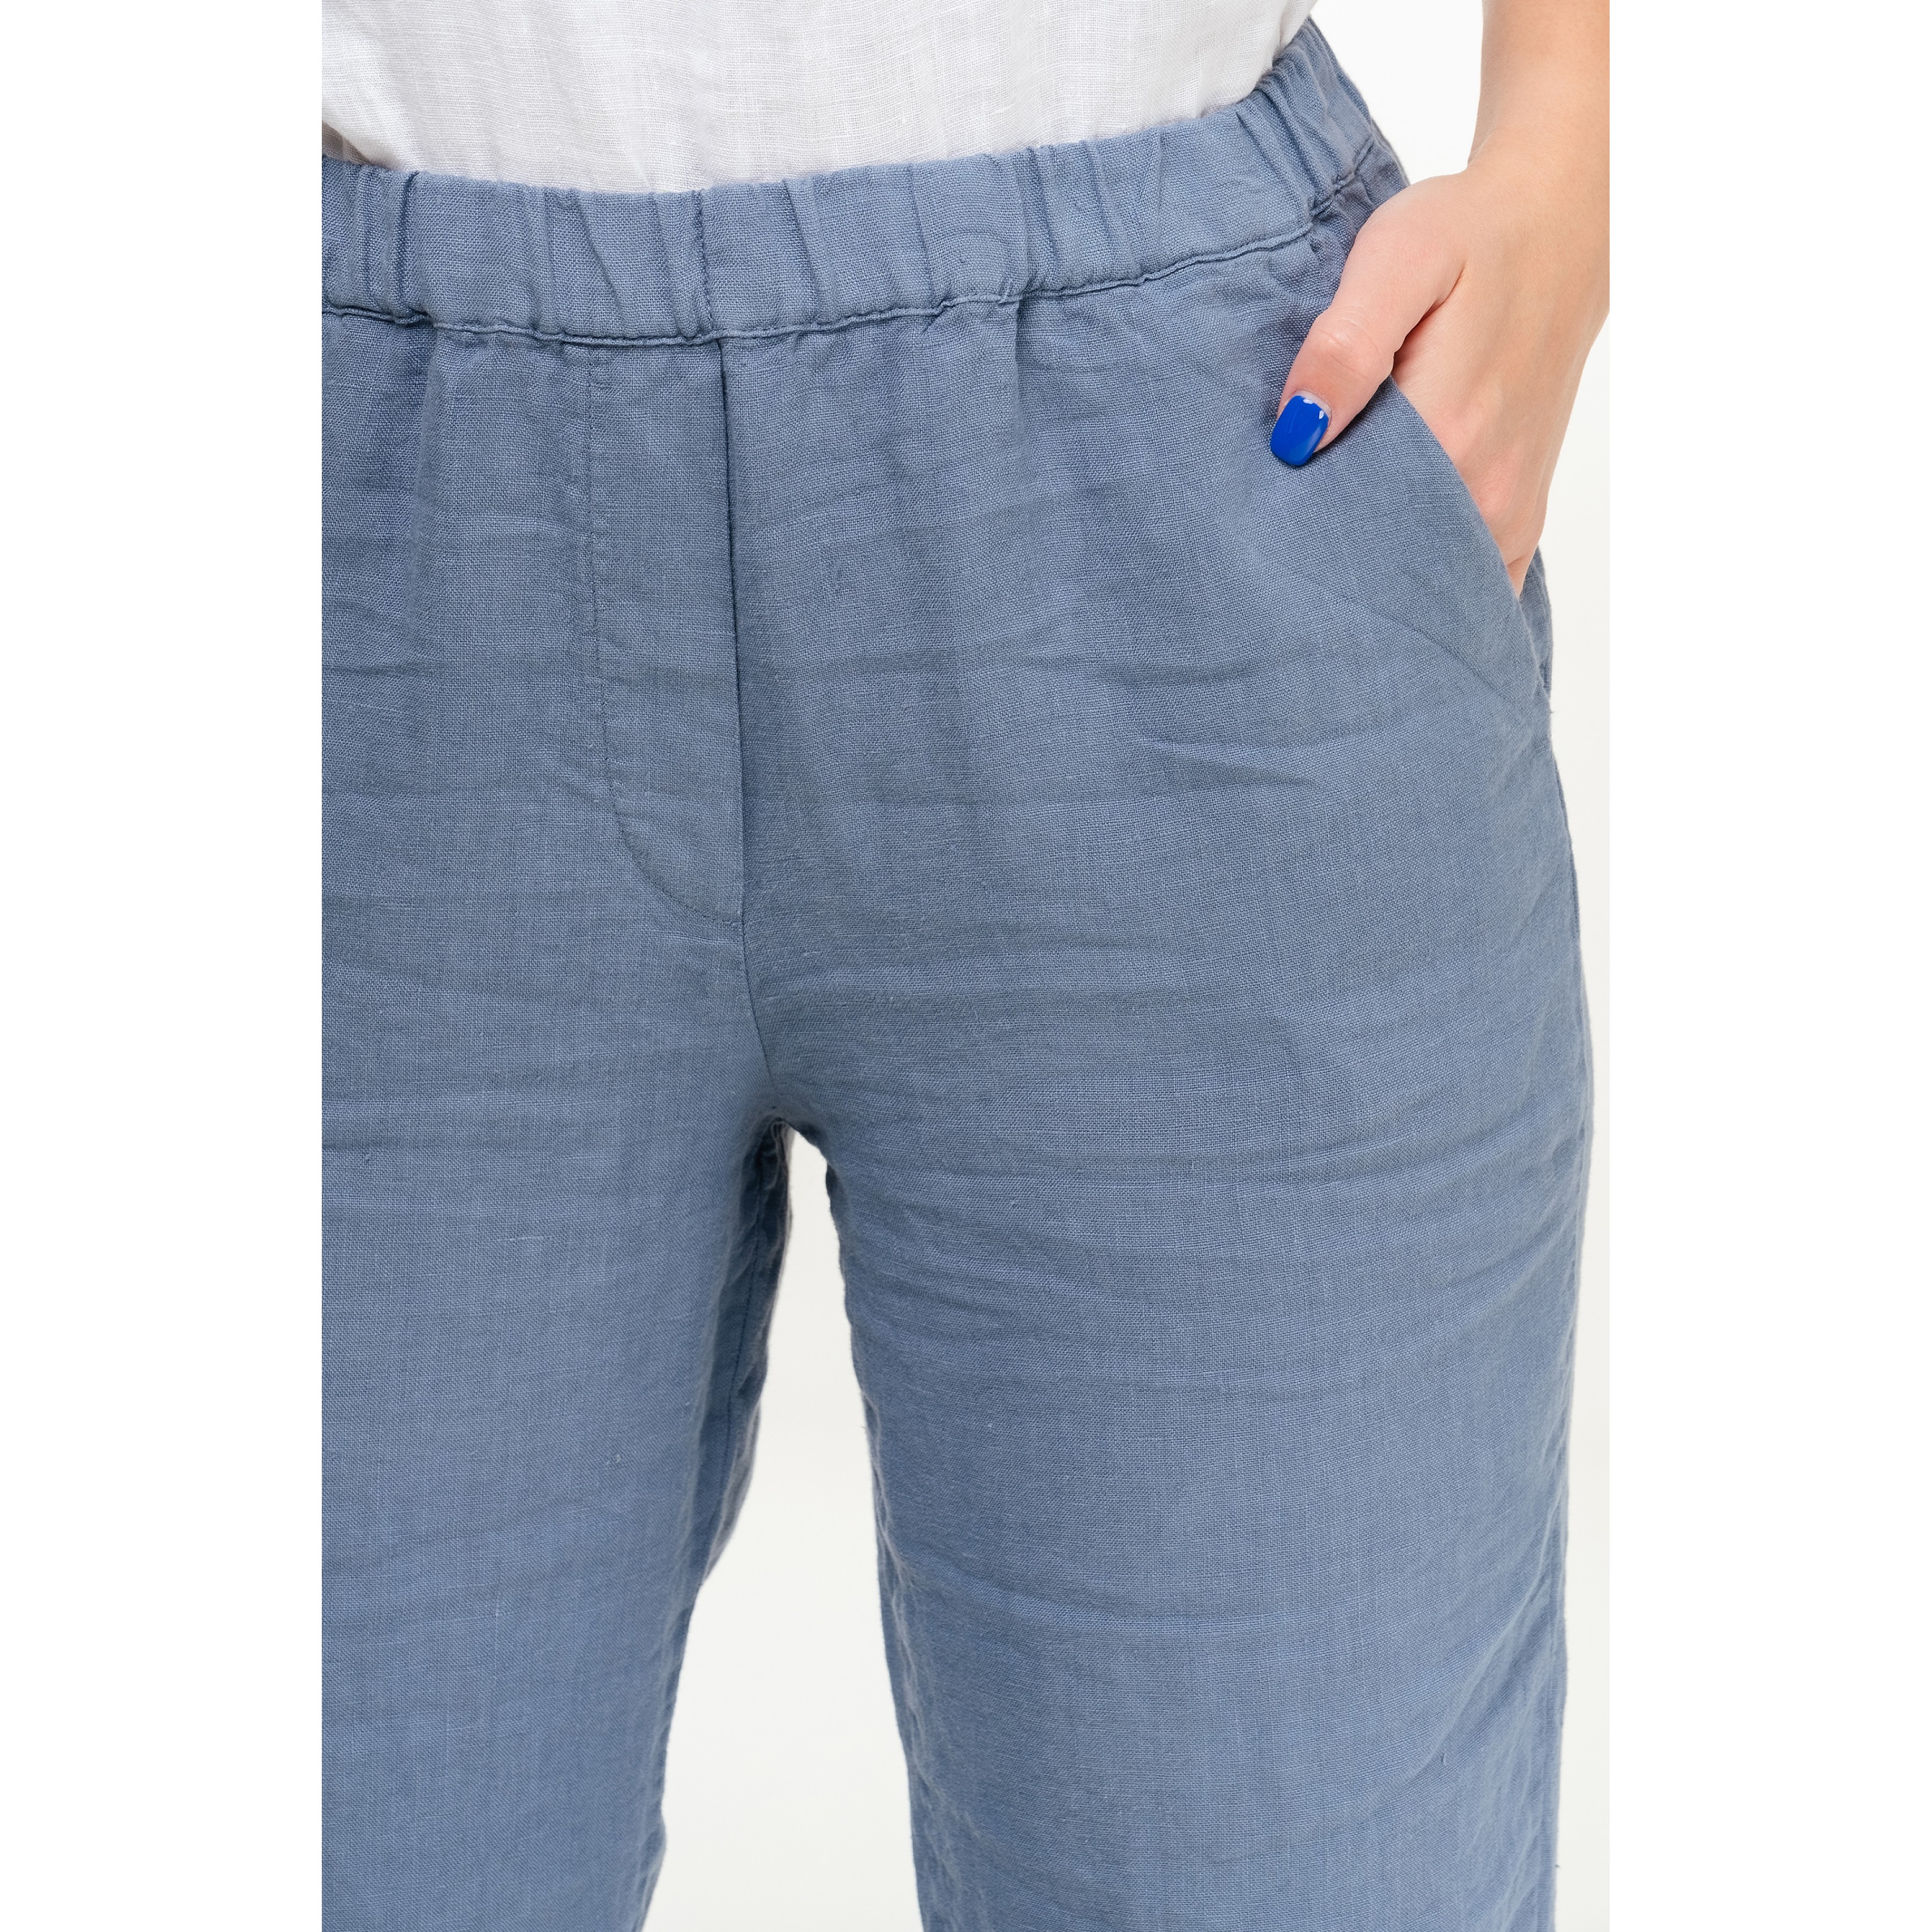 JNGSA Women's Wide Leg Pants Summer Solid Color Casual Button Elastic Waist  Long Pants with Pocket White 6 